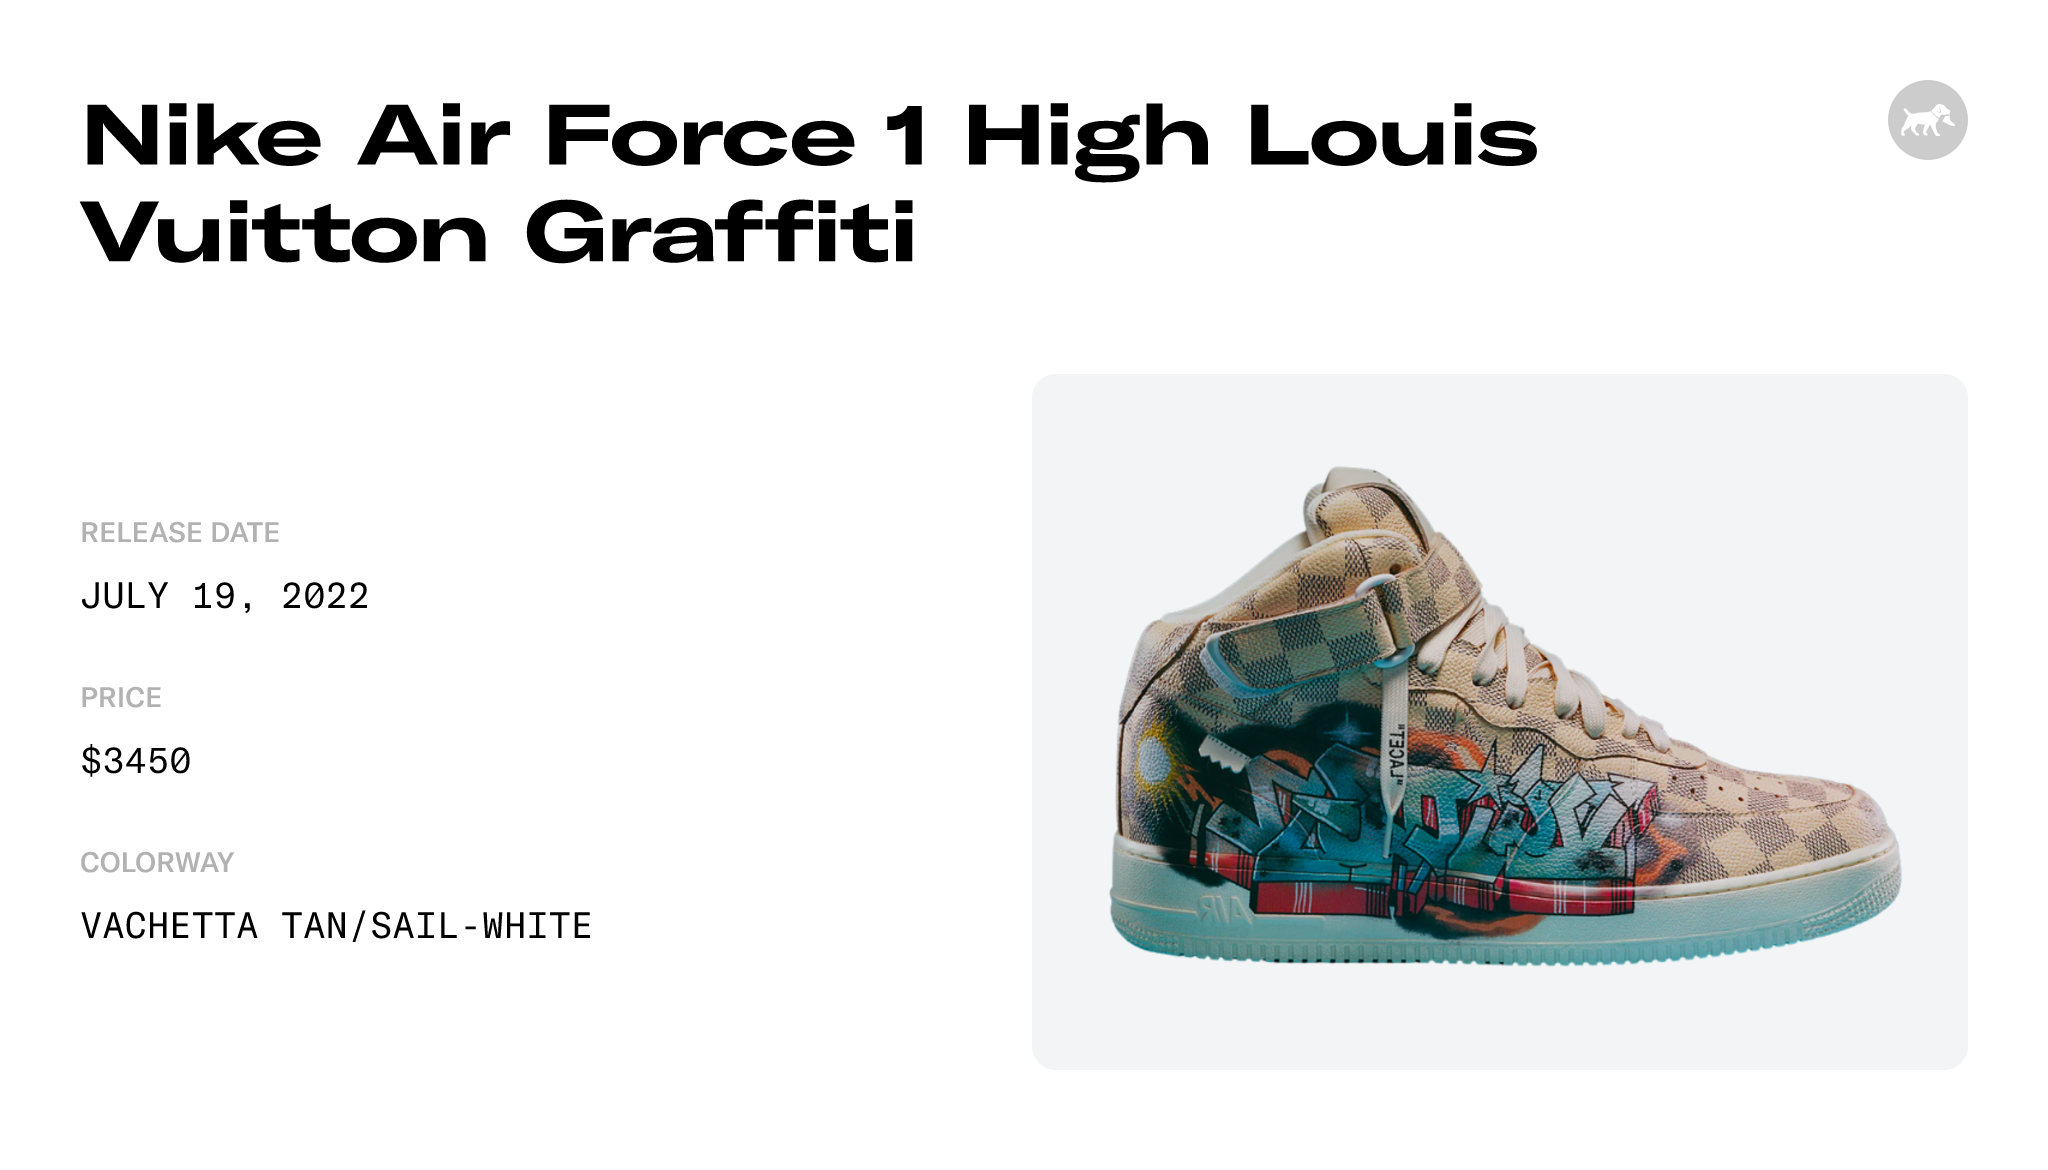 Louis Vuitton x Nike Air Force 1 Mid Graffiti | Size 8, Sneaker in Multicolor/Grey/Beige